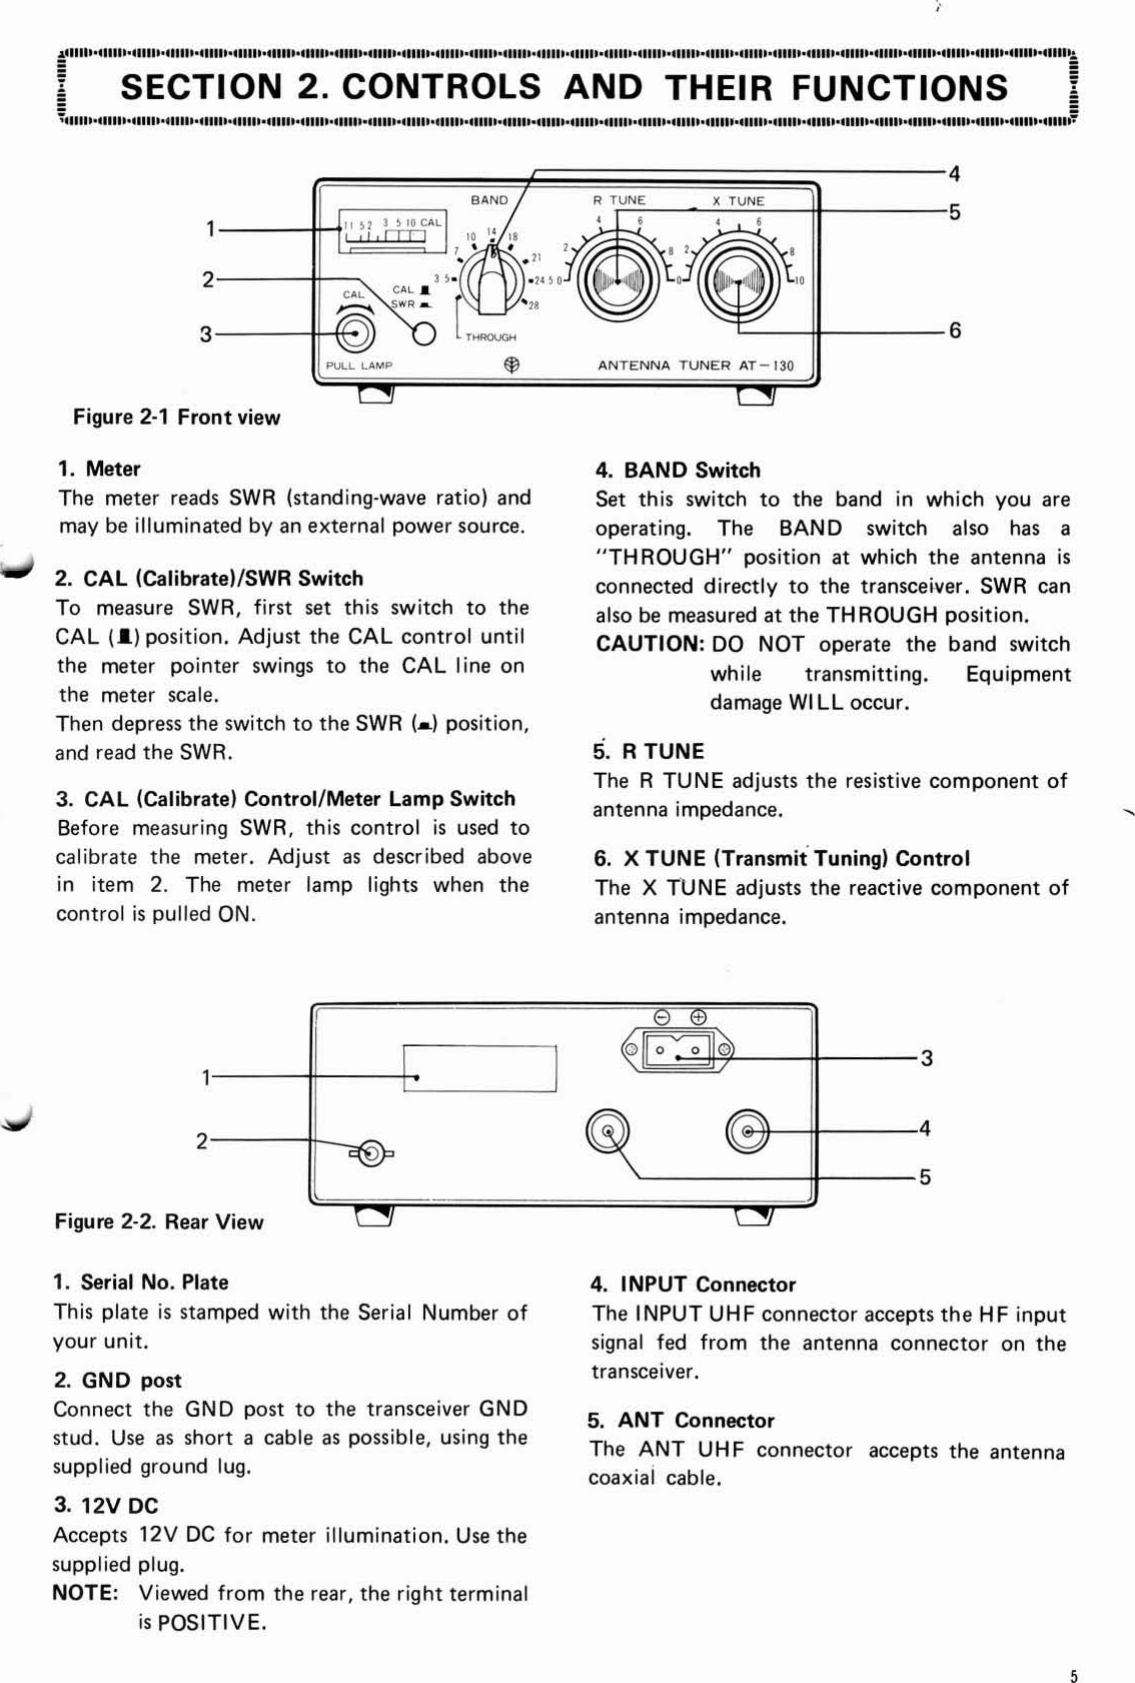 Page 5 of 12 - Kenwood Kenwood-Kenwood-Car-Stereo-System-At-130-Users-Manual- Antenna Tuner AT-130 Instruction Manual  Kenwood-kenwood-car-stereo-system-at-130-users-manual